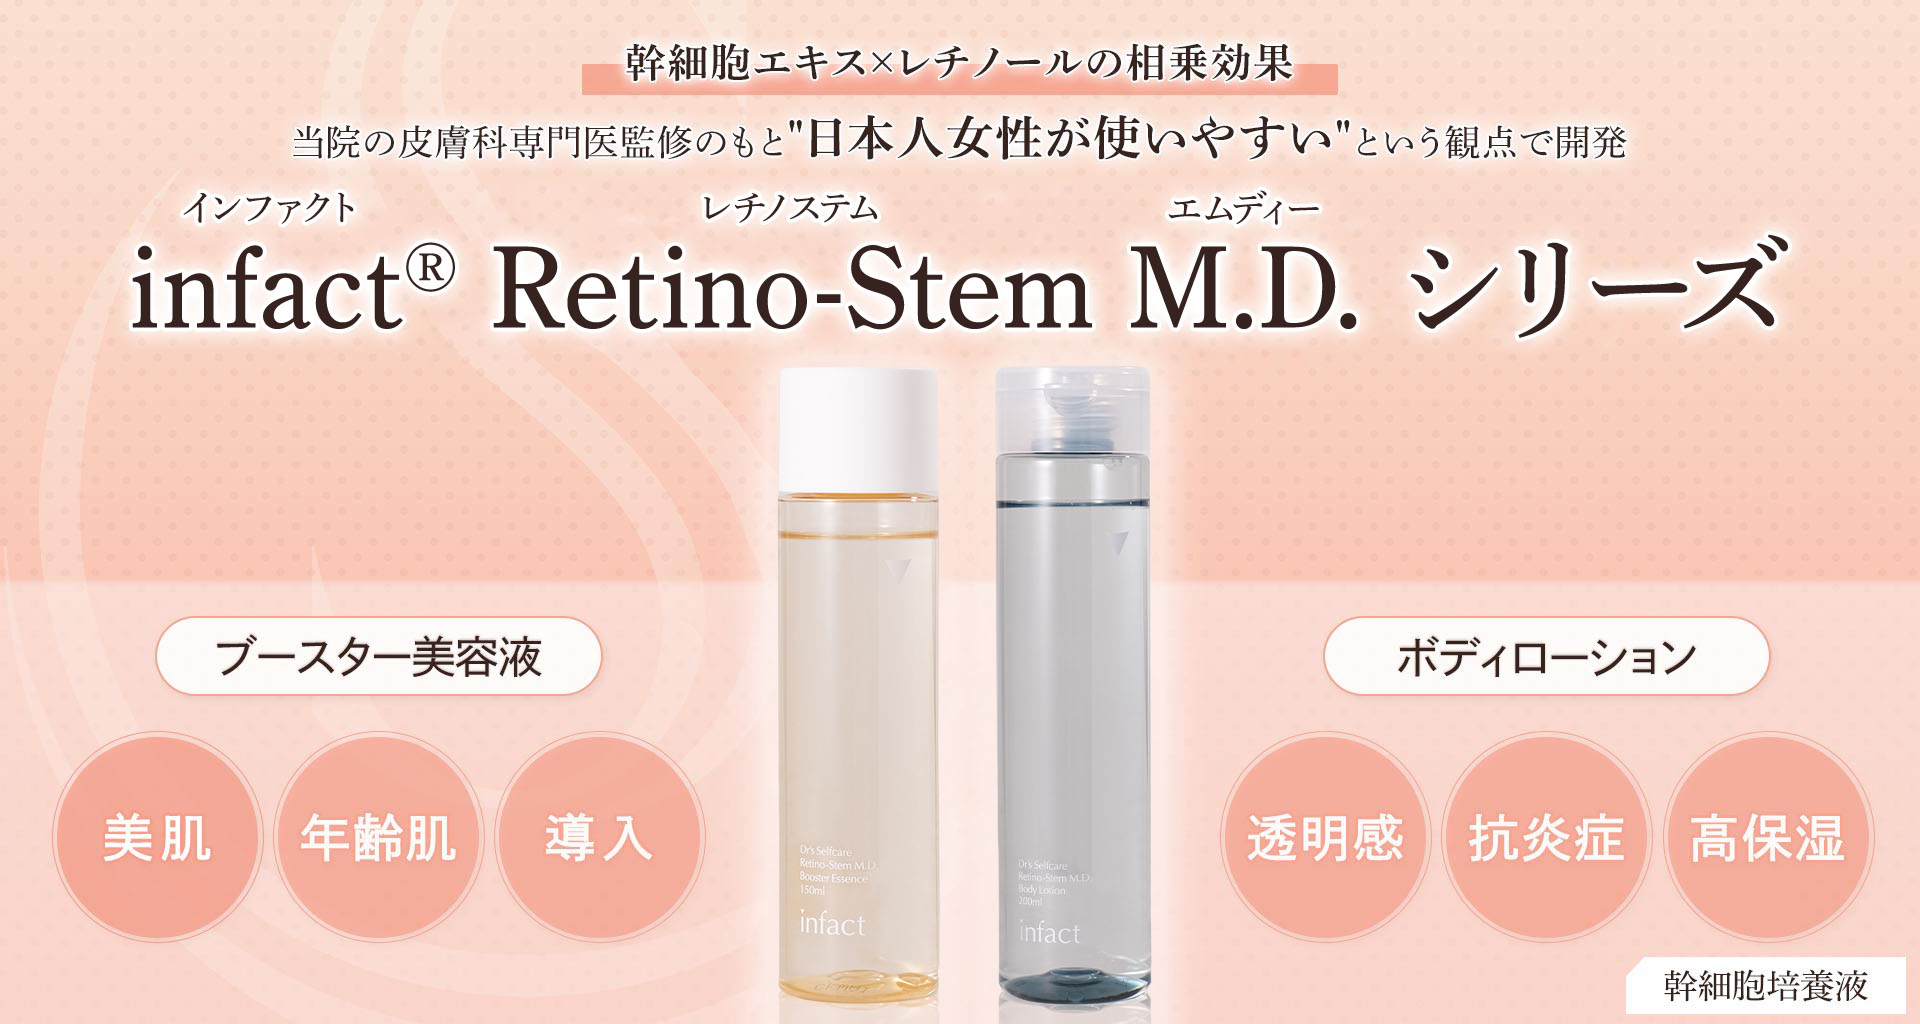 infact® Retino-Stem M.D. シリーズ（インファクトレチノステム M.D. シリーズ）